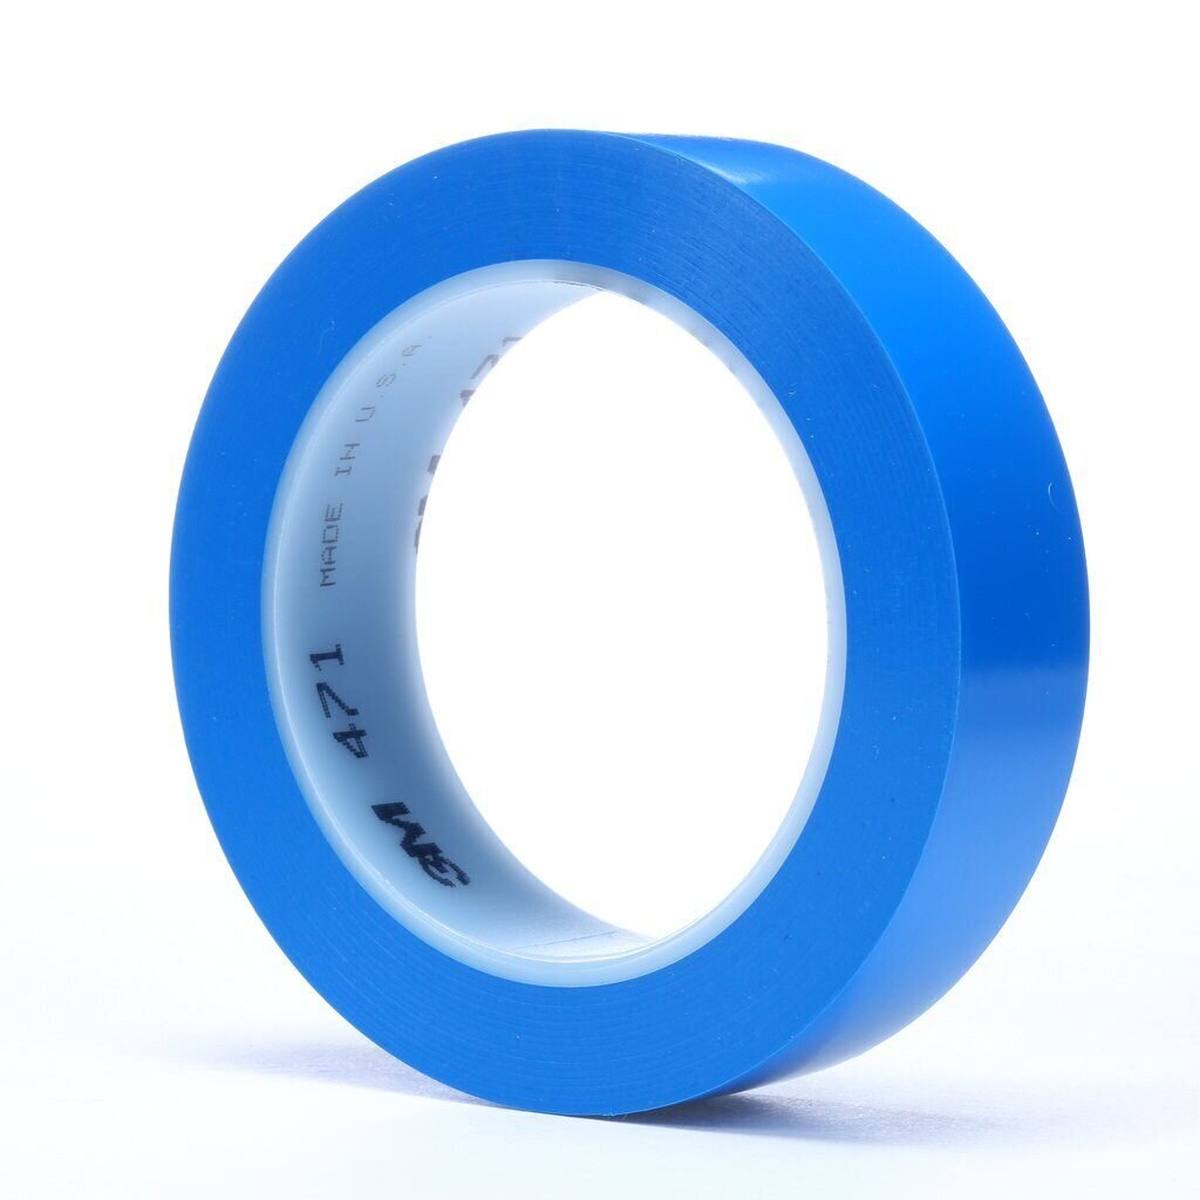 3M soft PVC adhesive tape 471 F, blue, 25 mm x 33 m, 0.13 mm